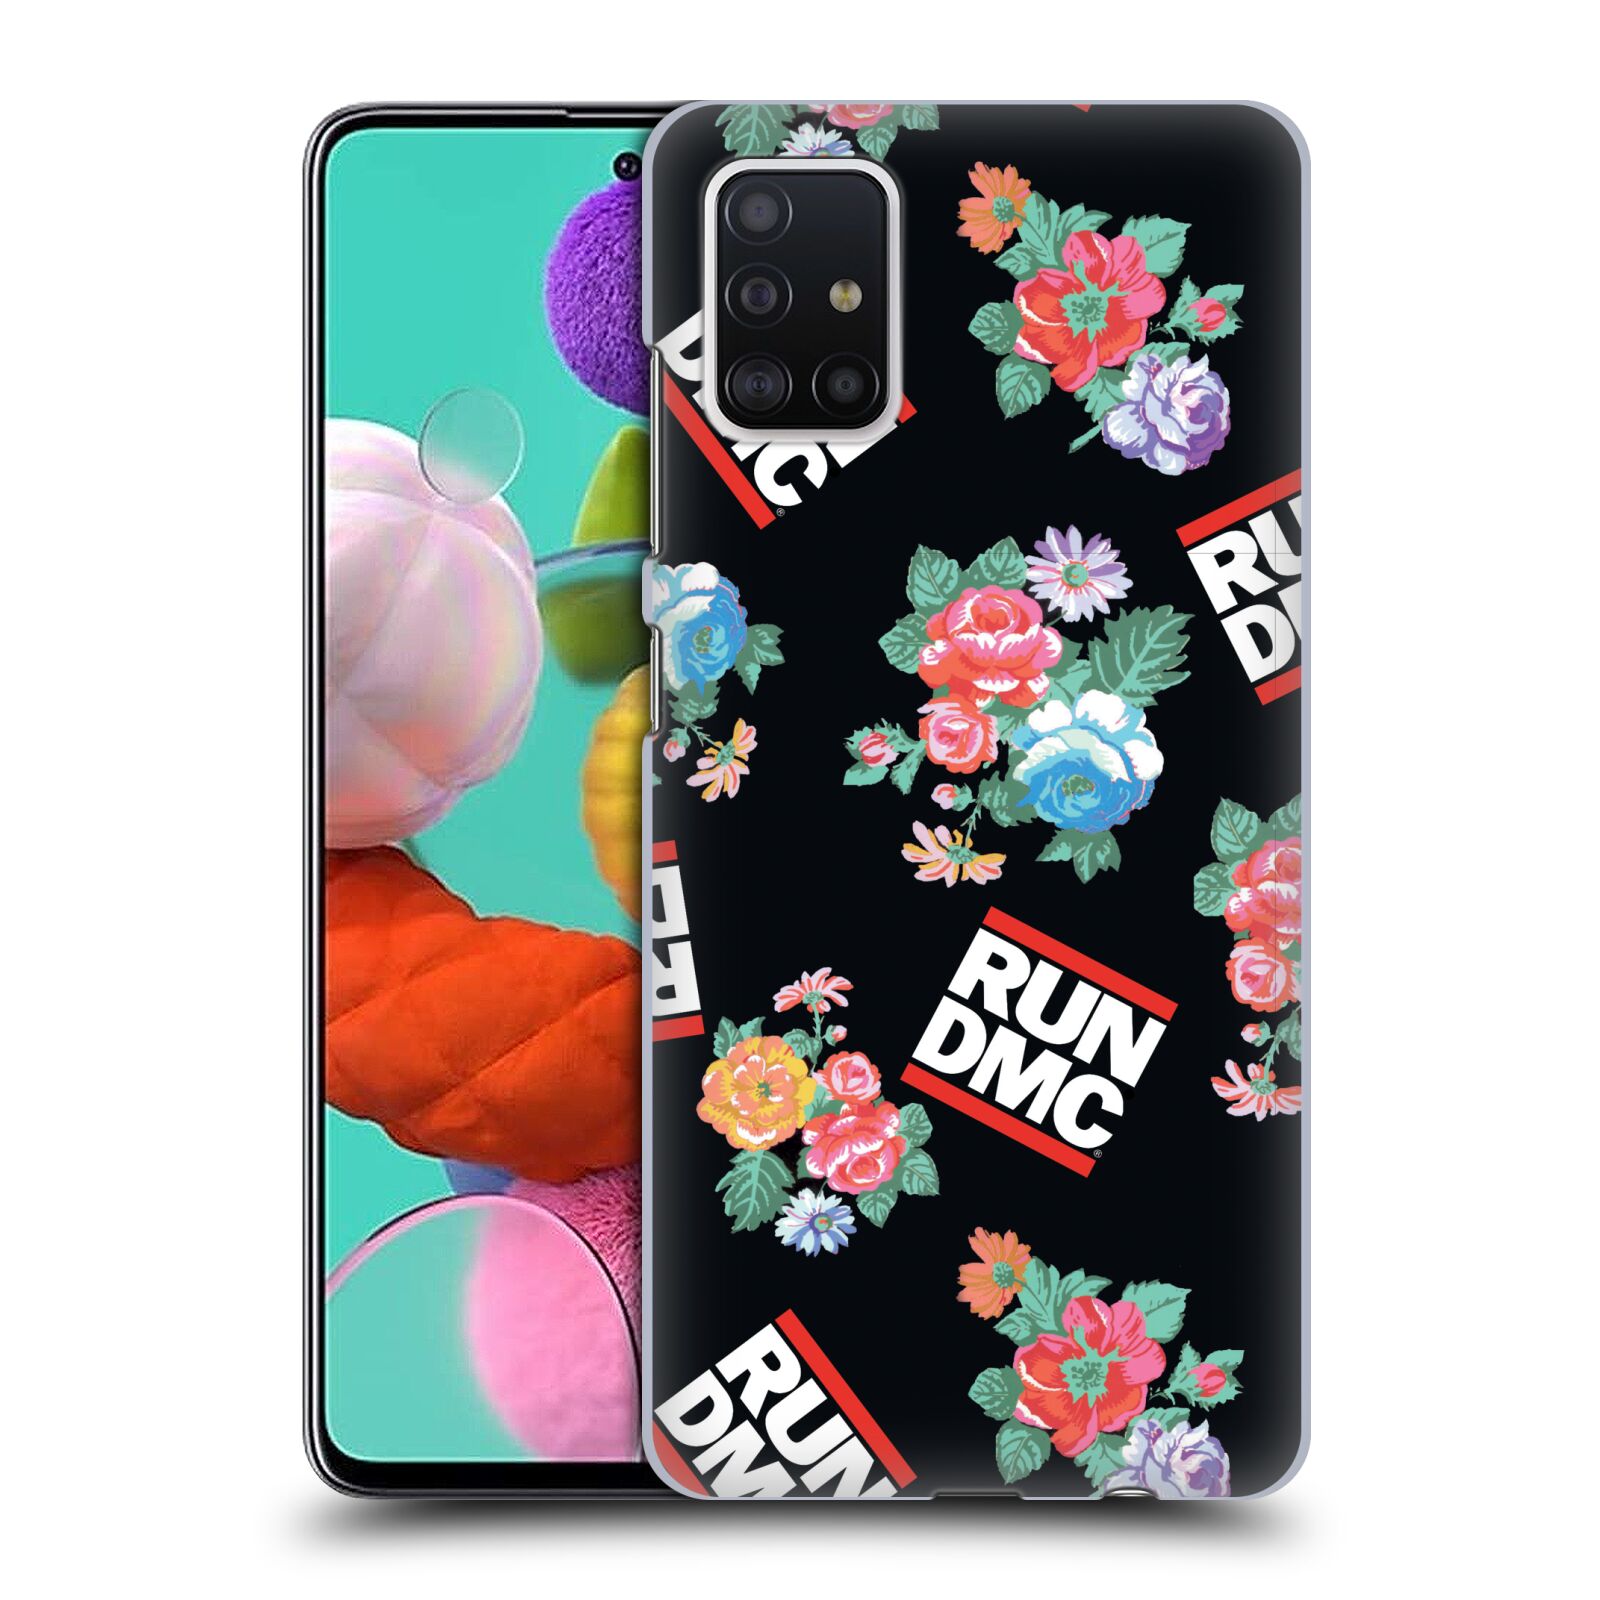 Pouzdro na mobil Samsung Galaxy A51 - HEAD CASE - rapová kapela Run DMC květiny černé pozadí